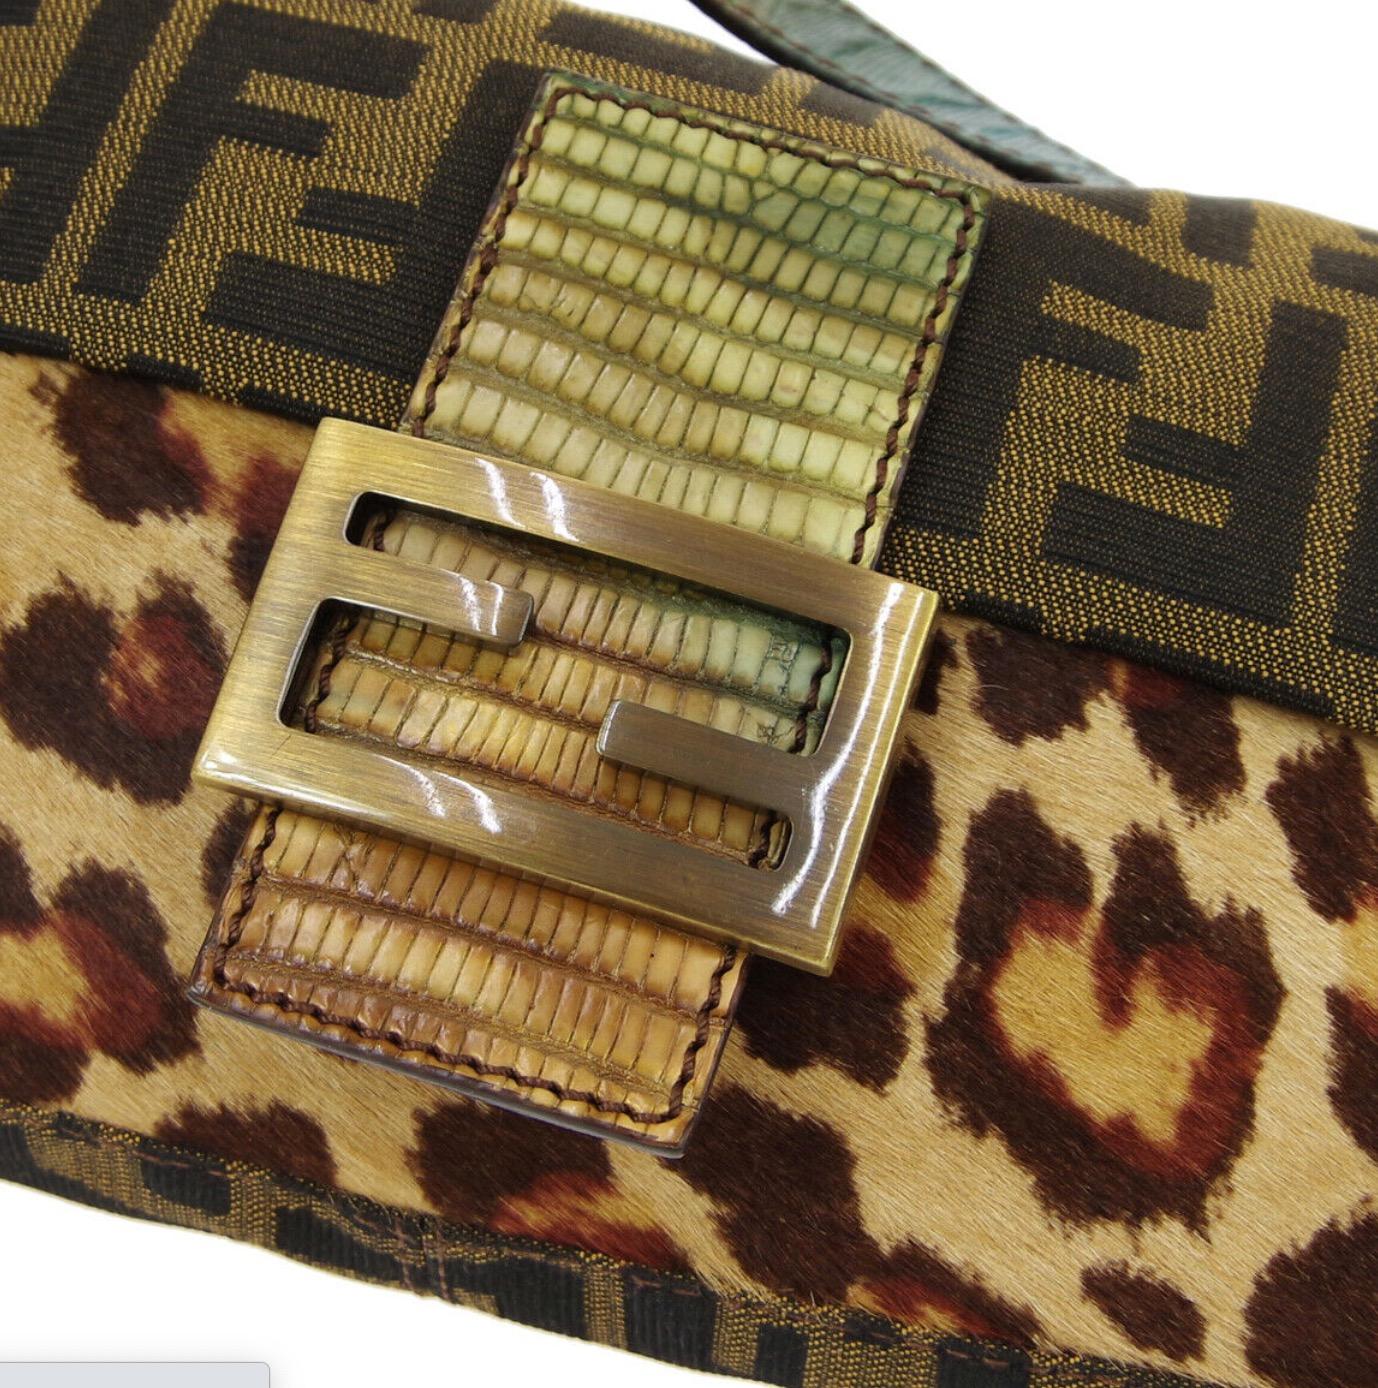 Fabric
Lizard
Crocodile
Ponyhair
Gold tone hardware
Buckle closure
Satin lining
Made in Italy
Adjustable strap drop 4-7